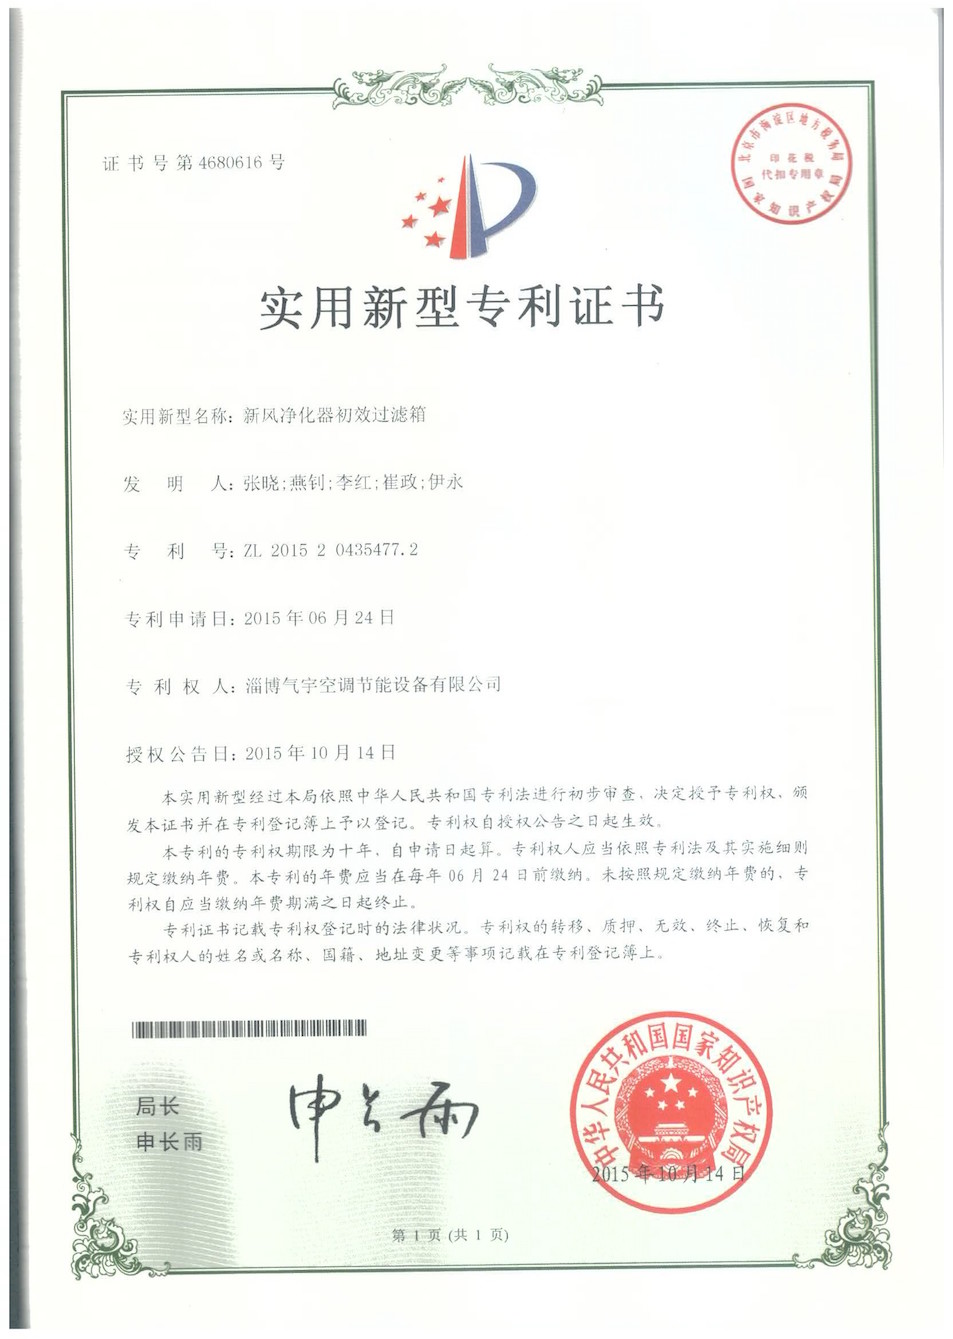 Practical patent certificate